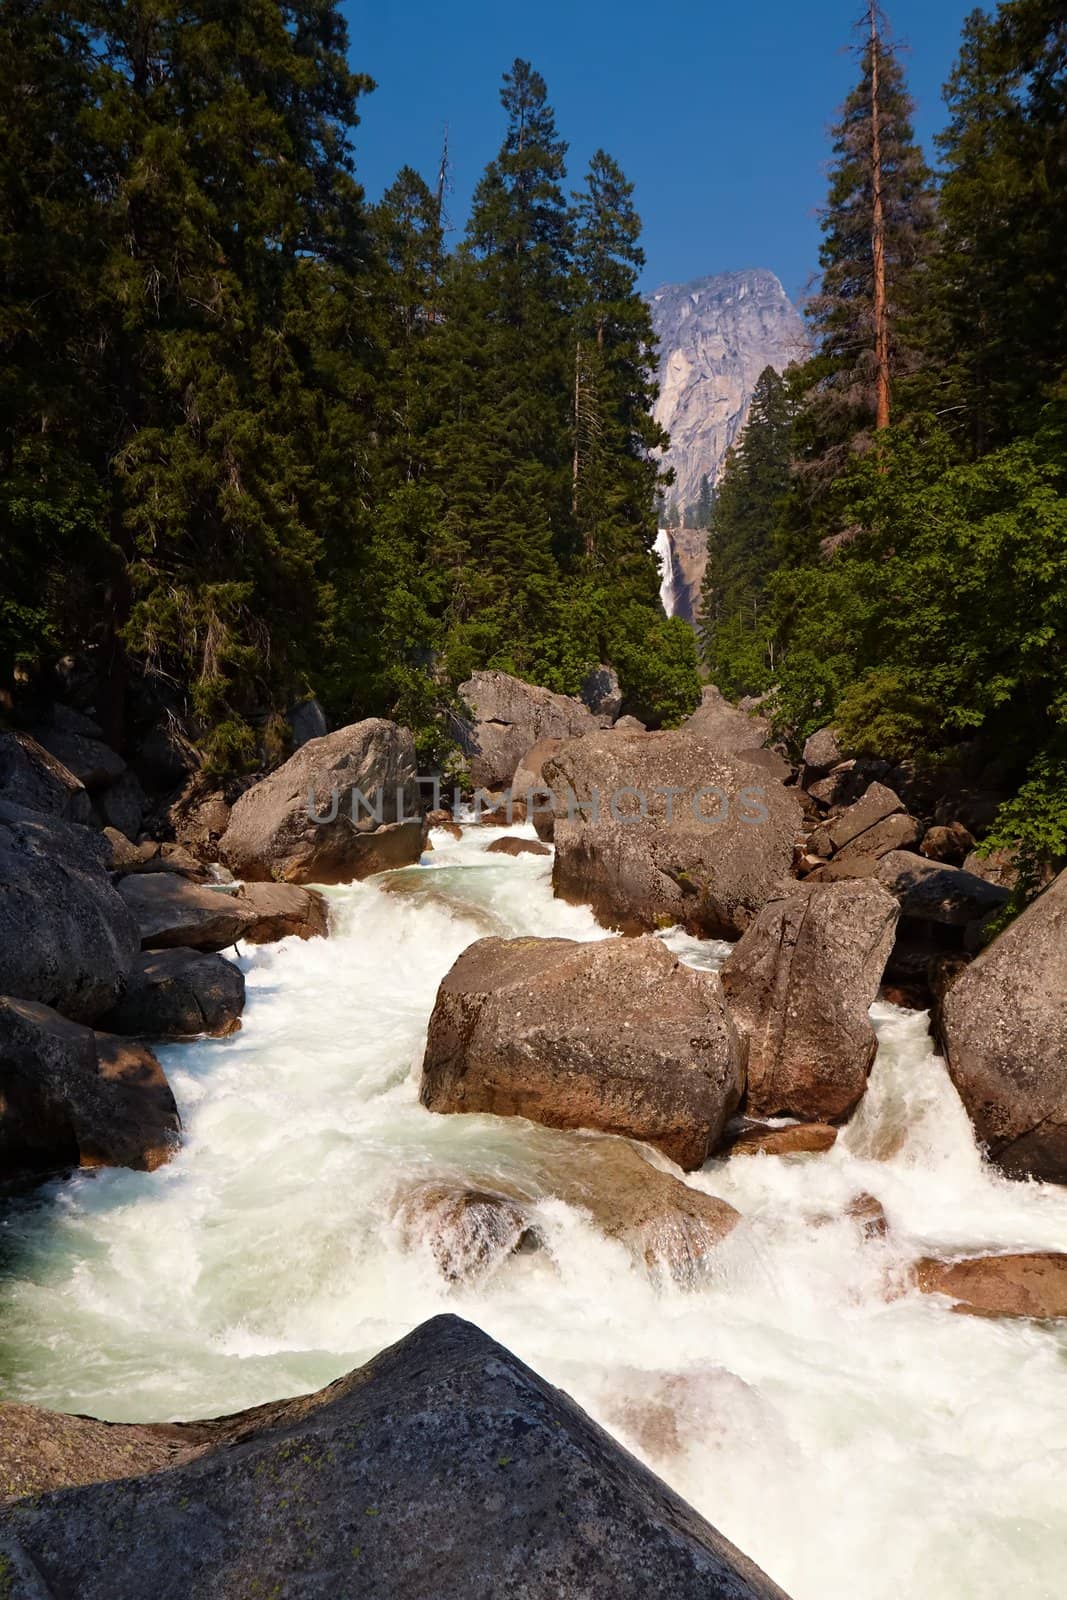 Stream in Yosemite Valley, Yosemite National Park, California, USA